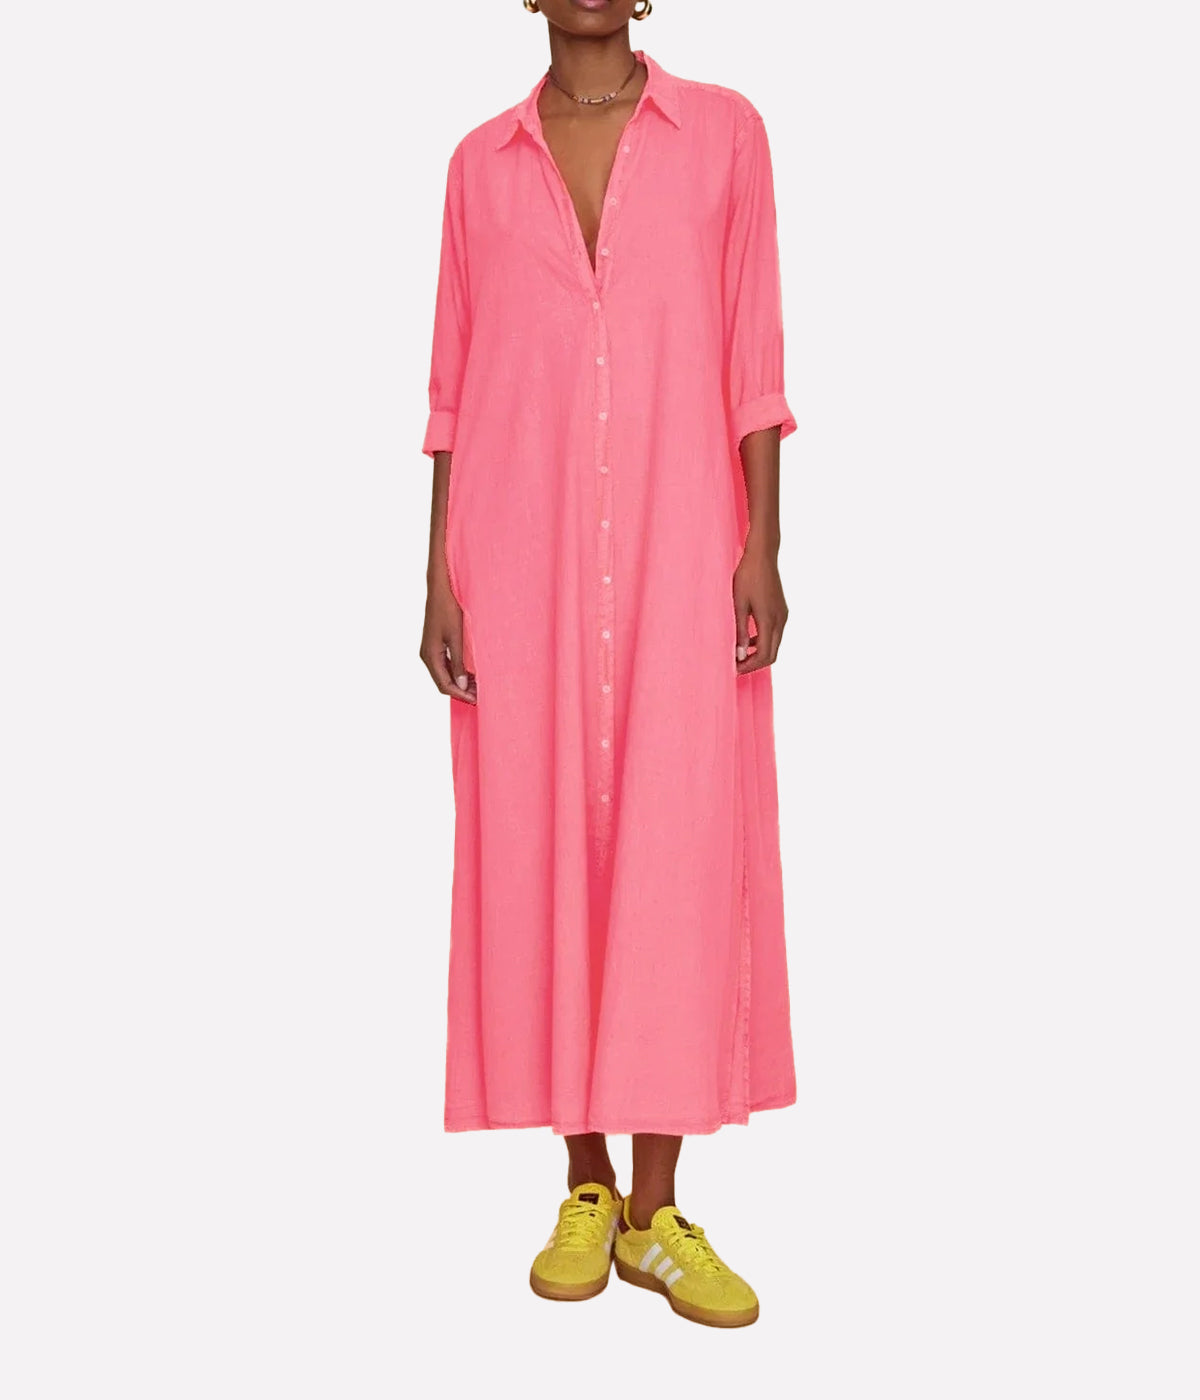 Boden Dress in Neon Pink